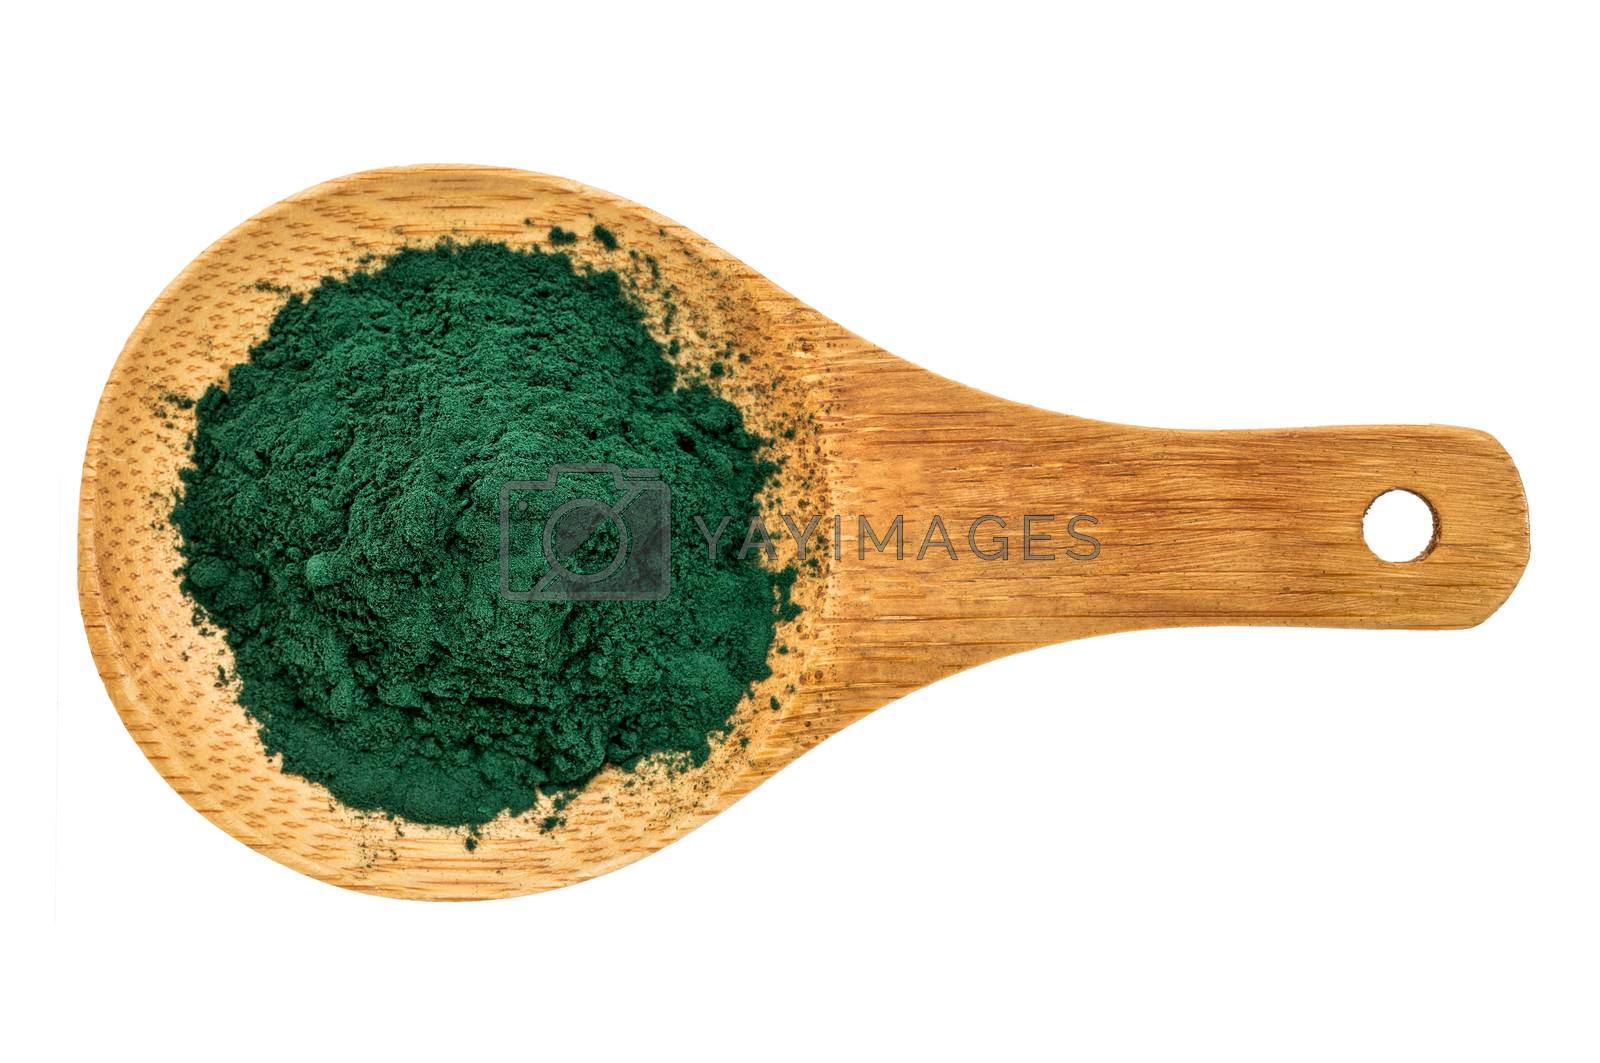 Royalty free image of Organic chlorella powder by PixelsAway